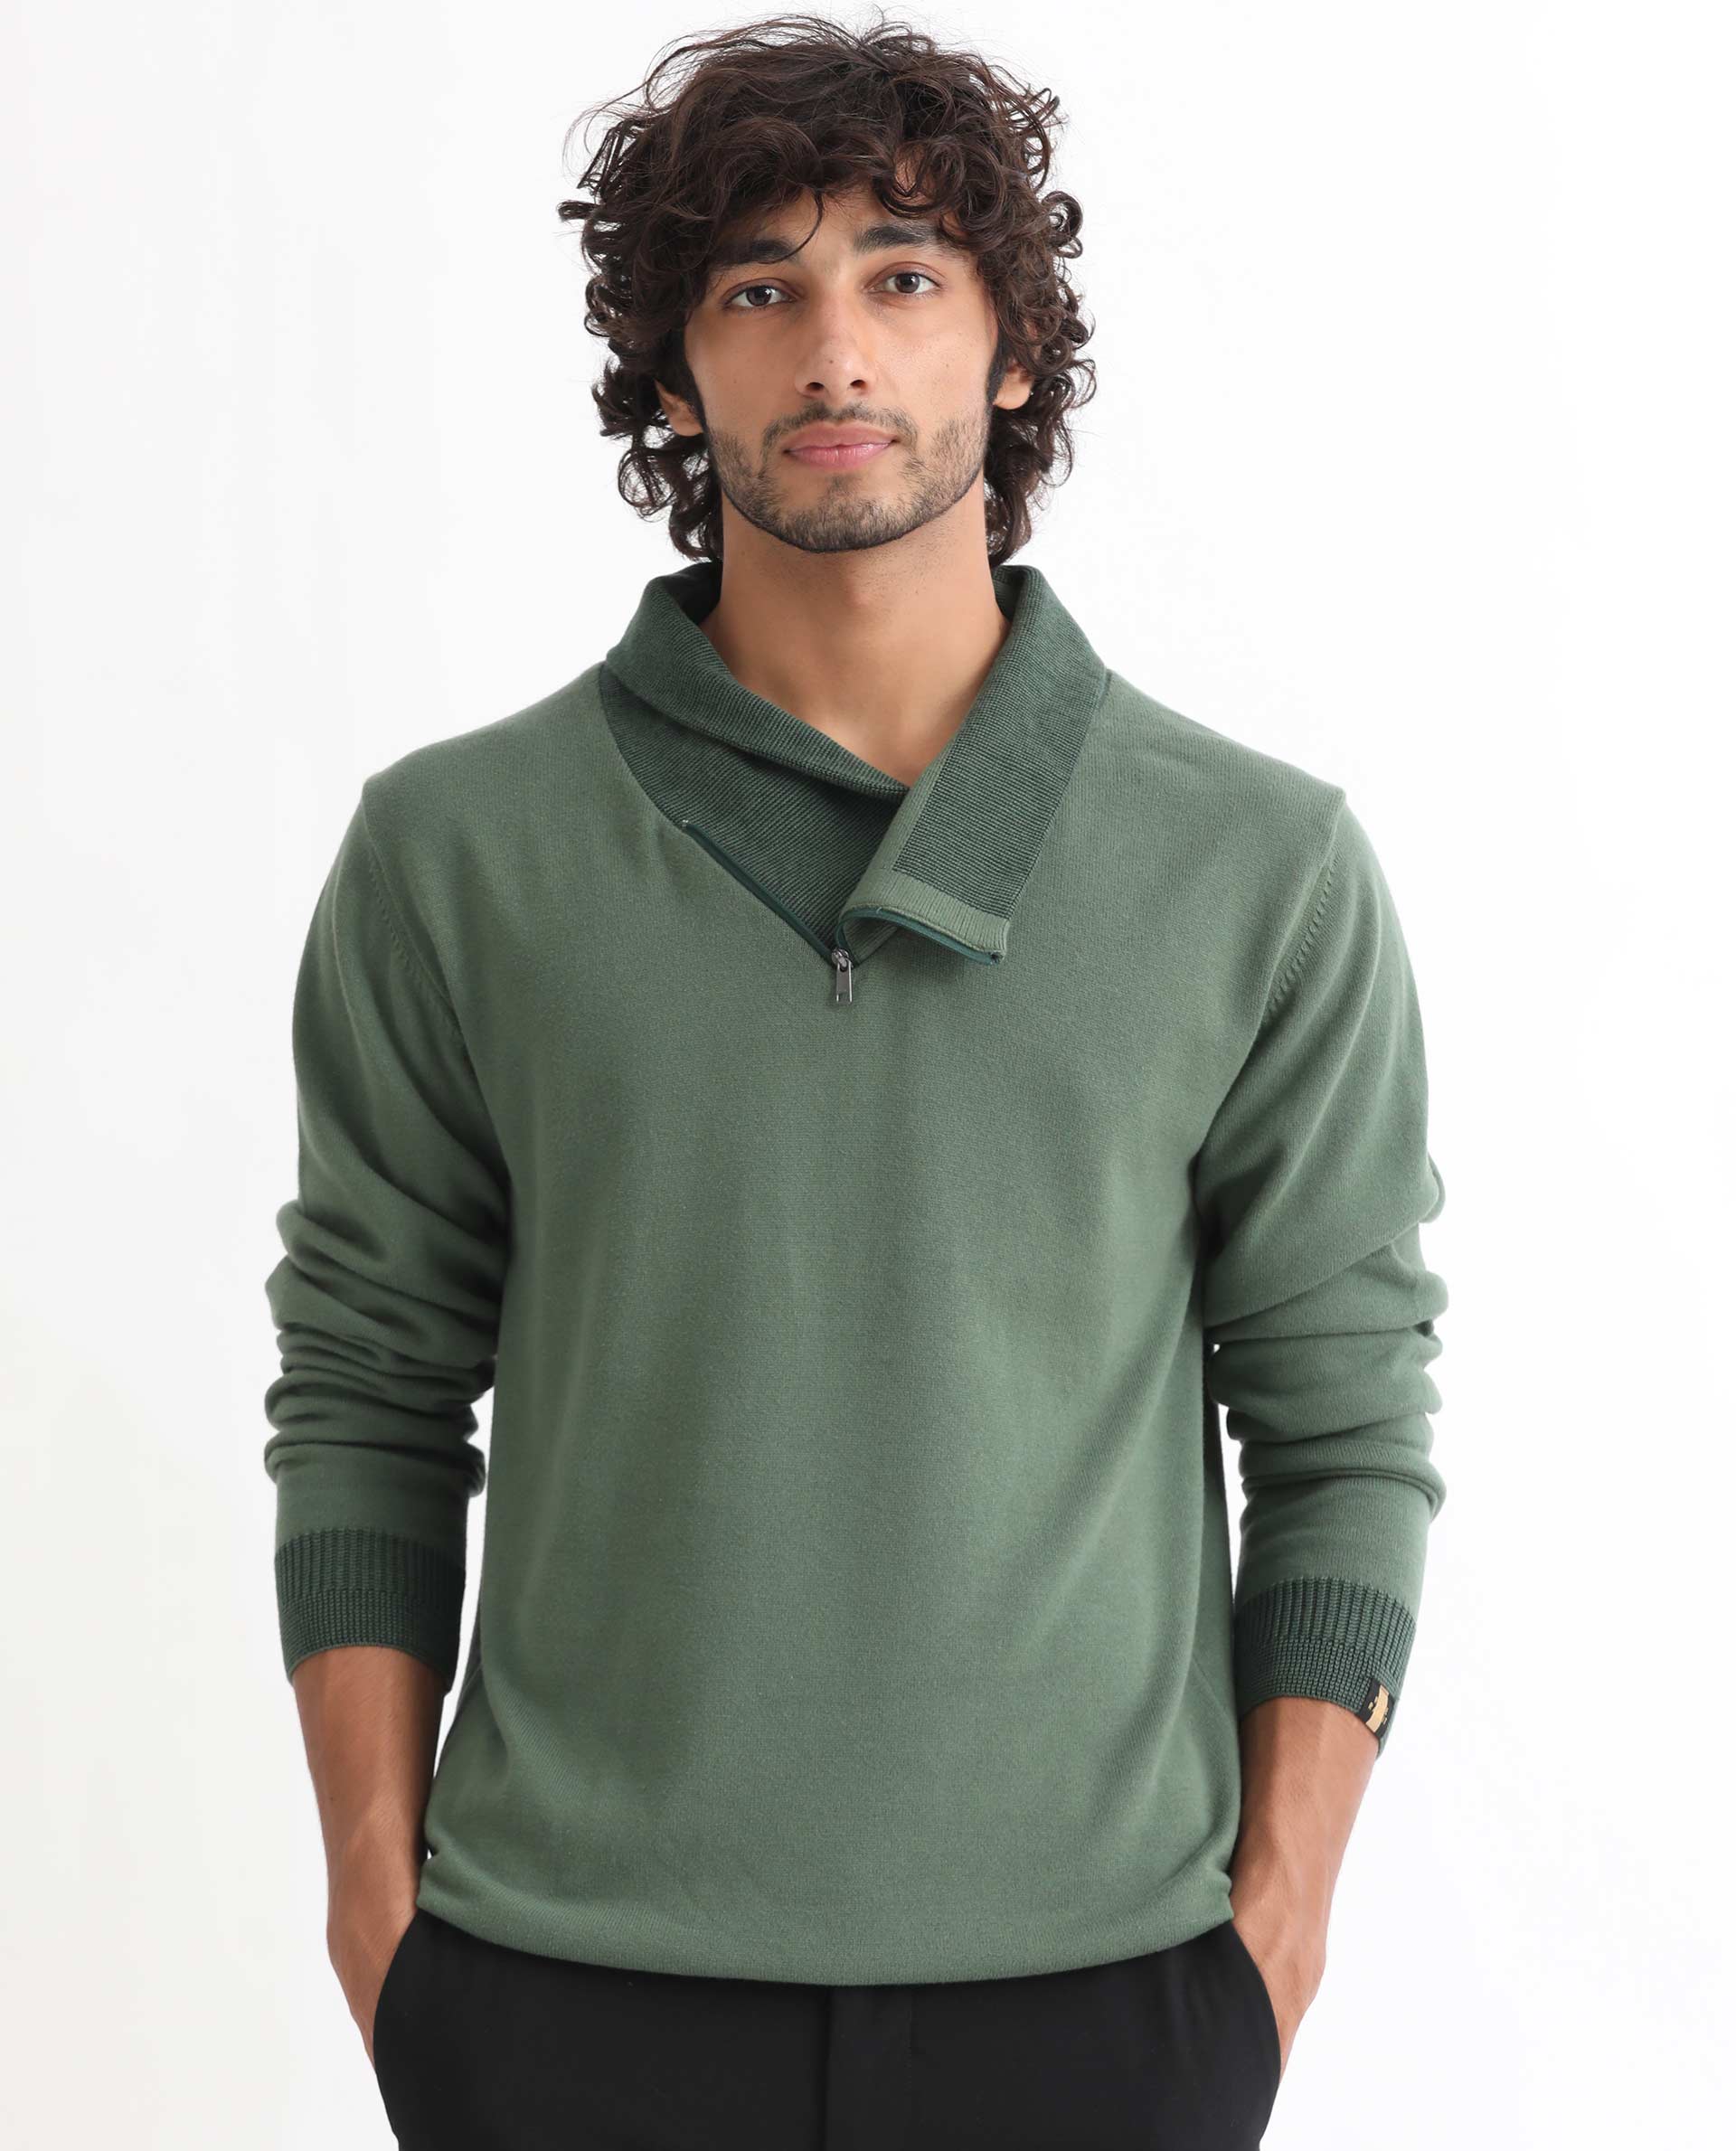 Men's Irish Cowlneck Pullover Sweater - Green